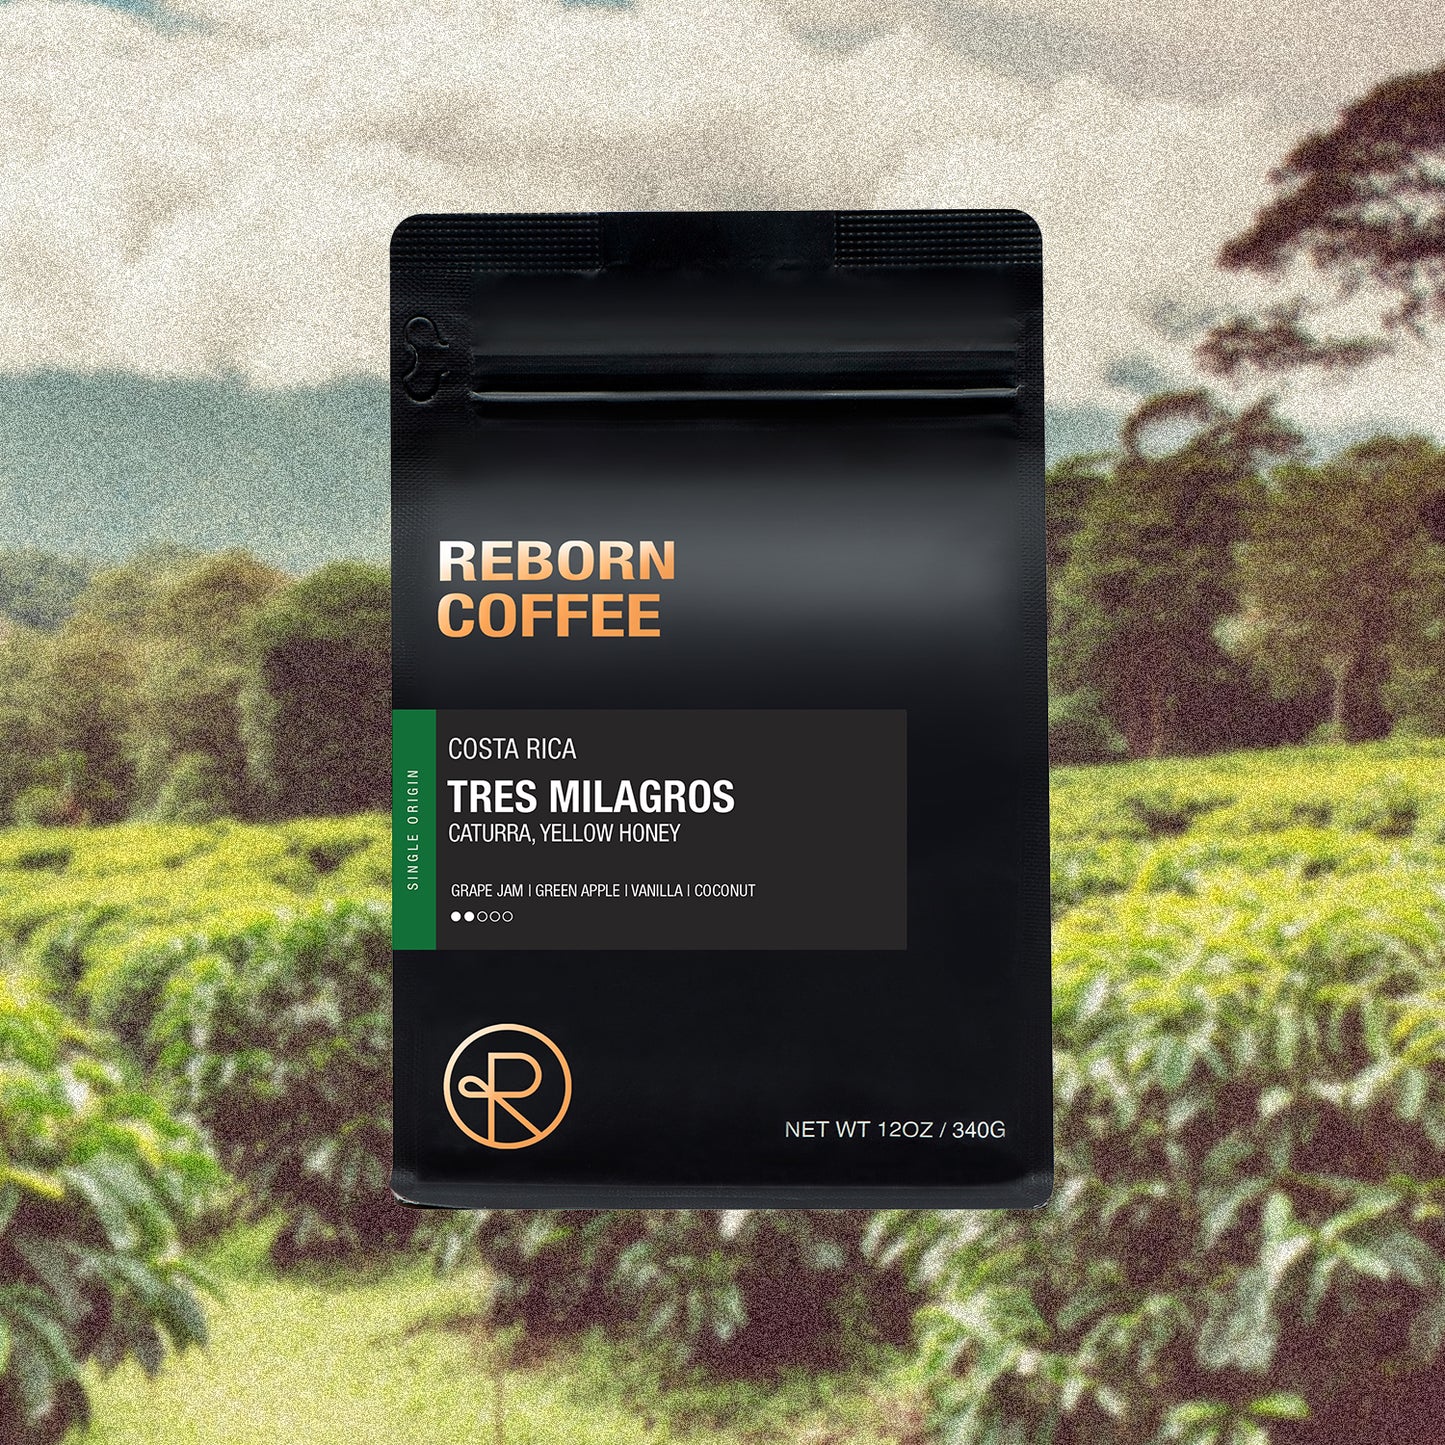 12oz bag of Costa Rica, Tres Milagros single origin Reborn Coffee whole beans.